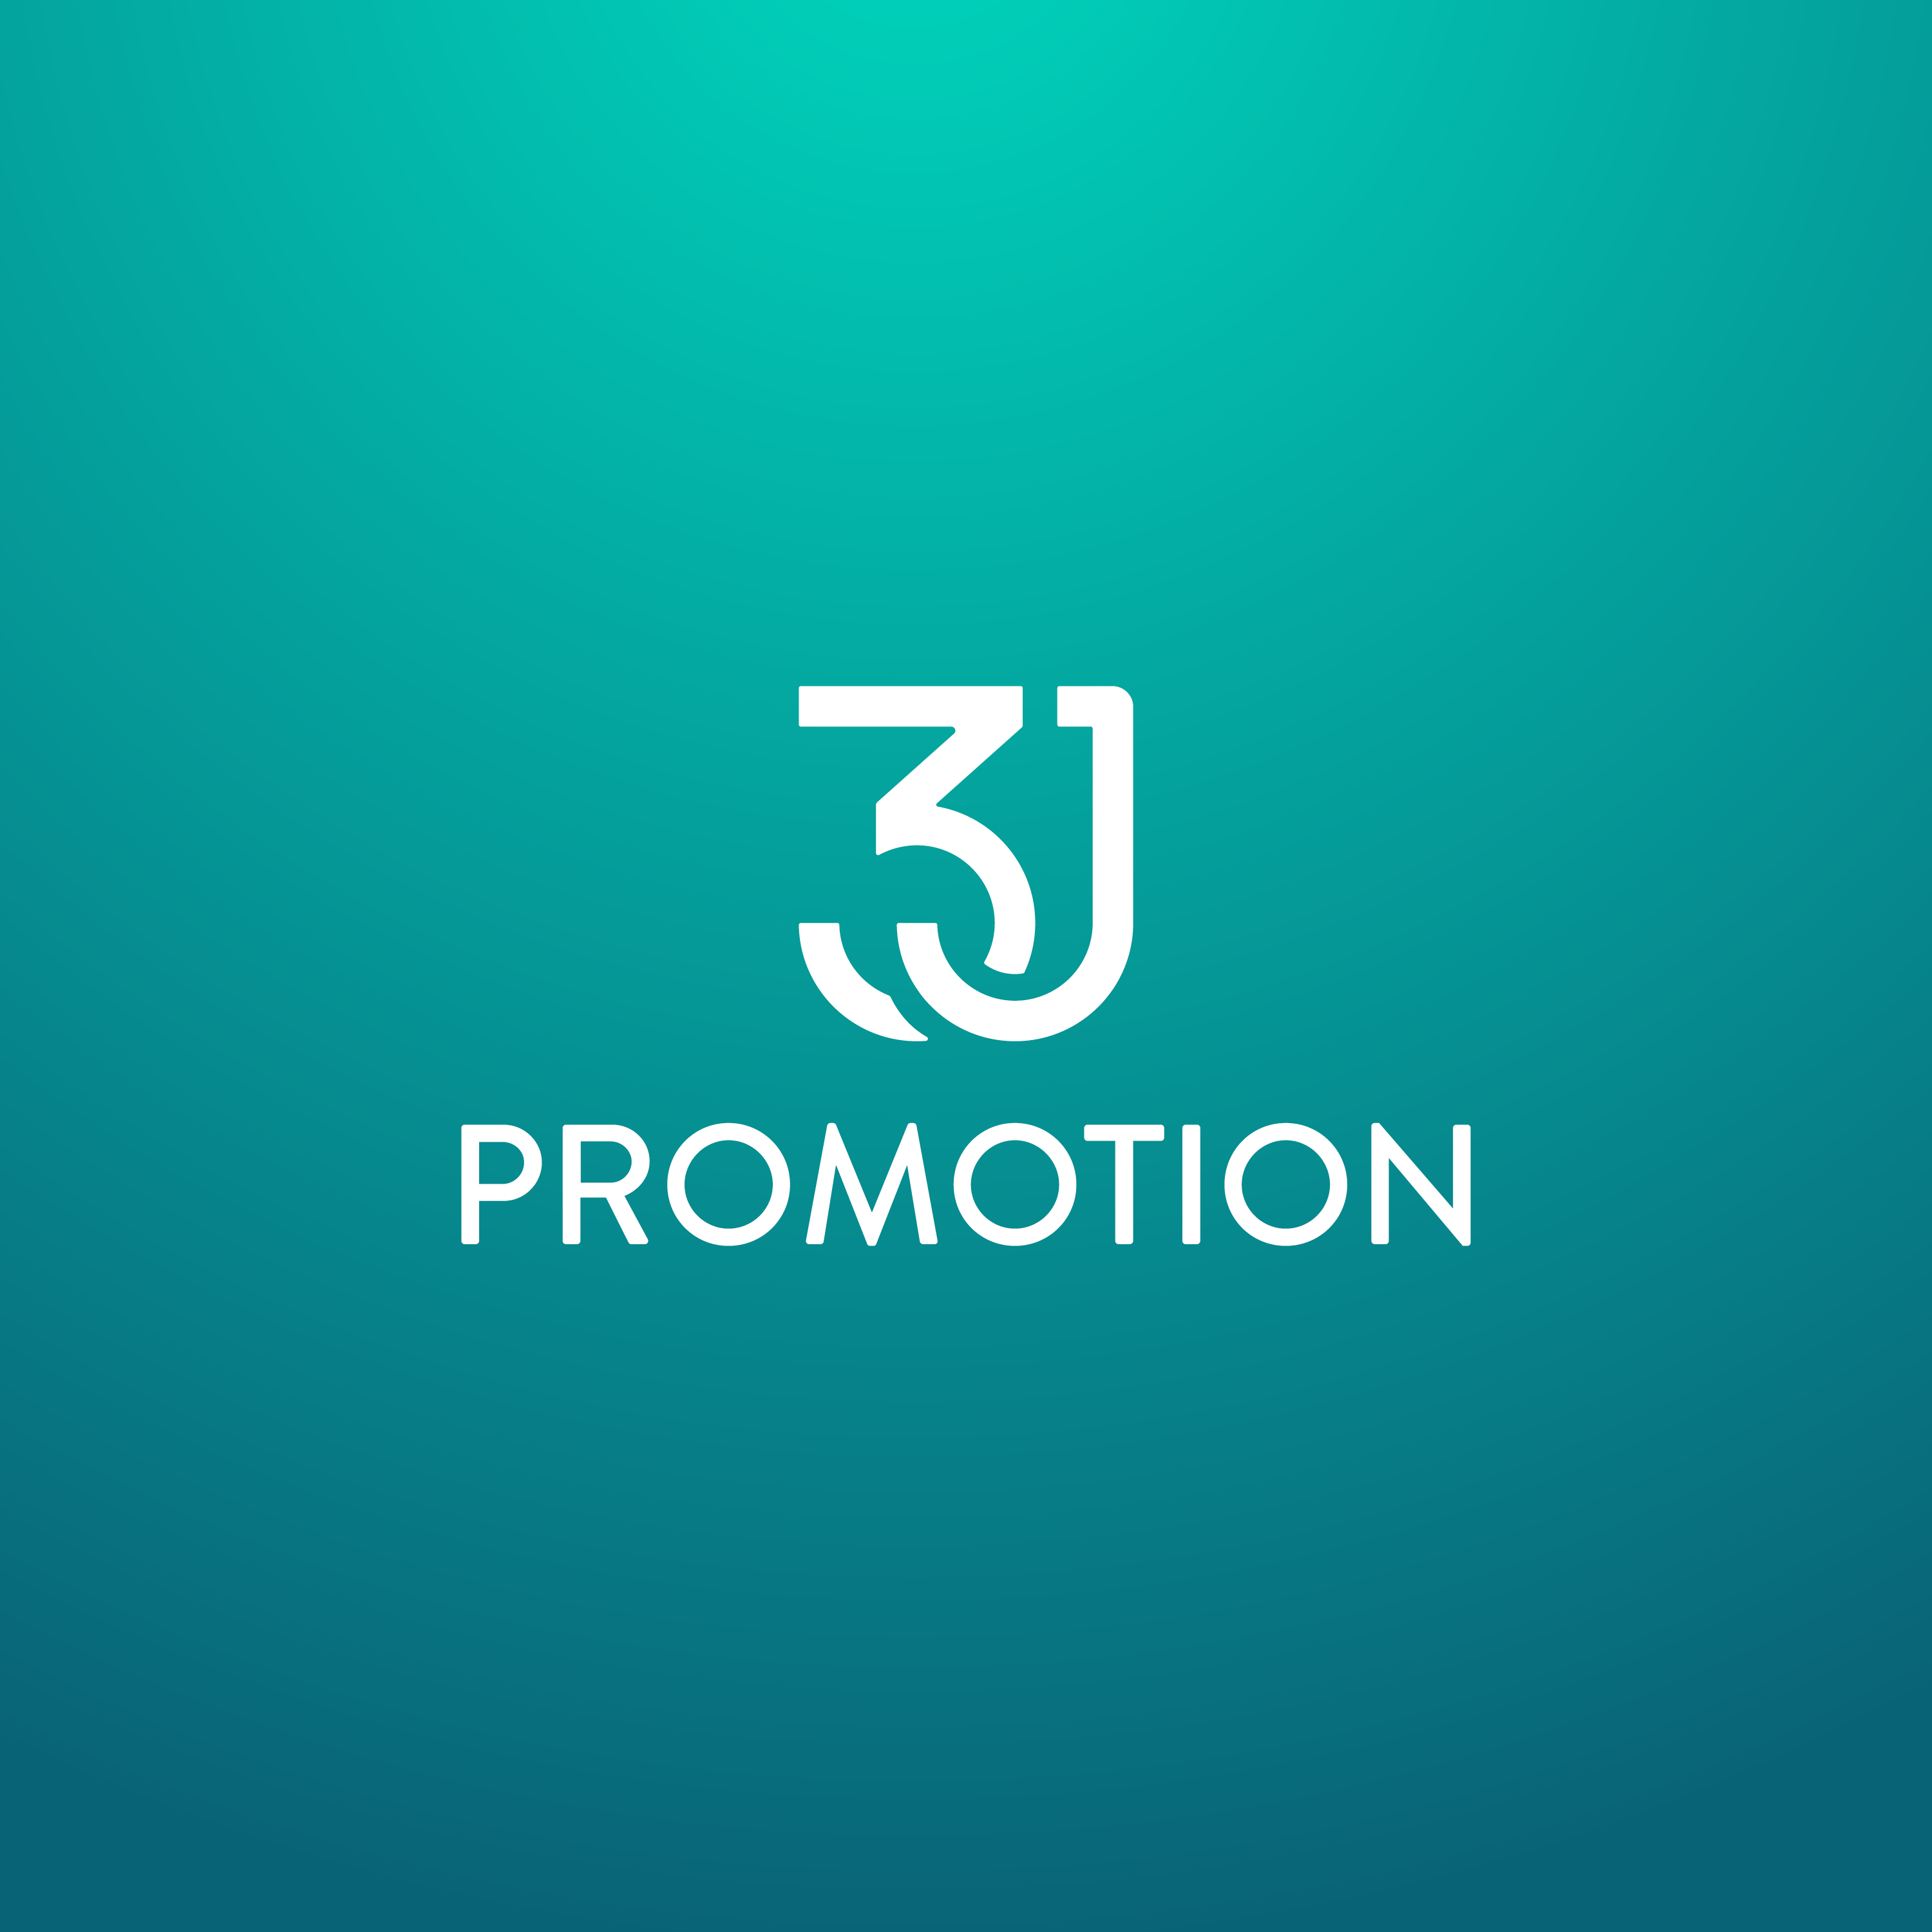 3J-promotion logo